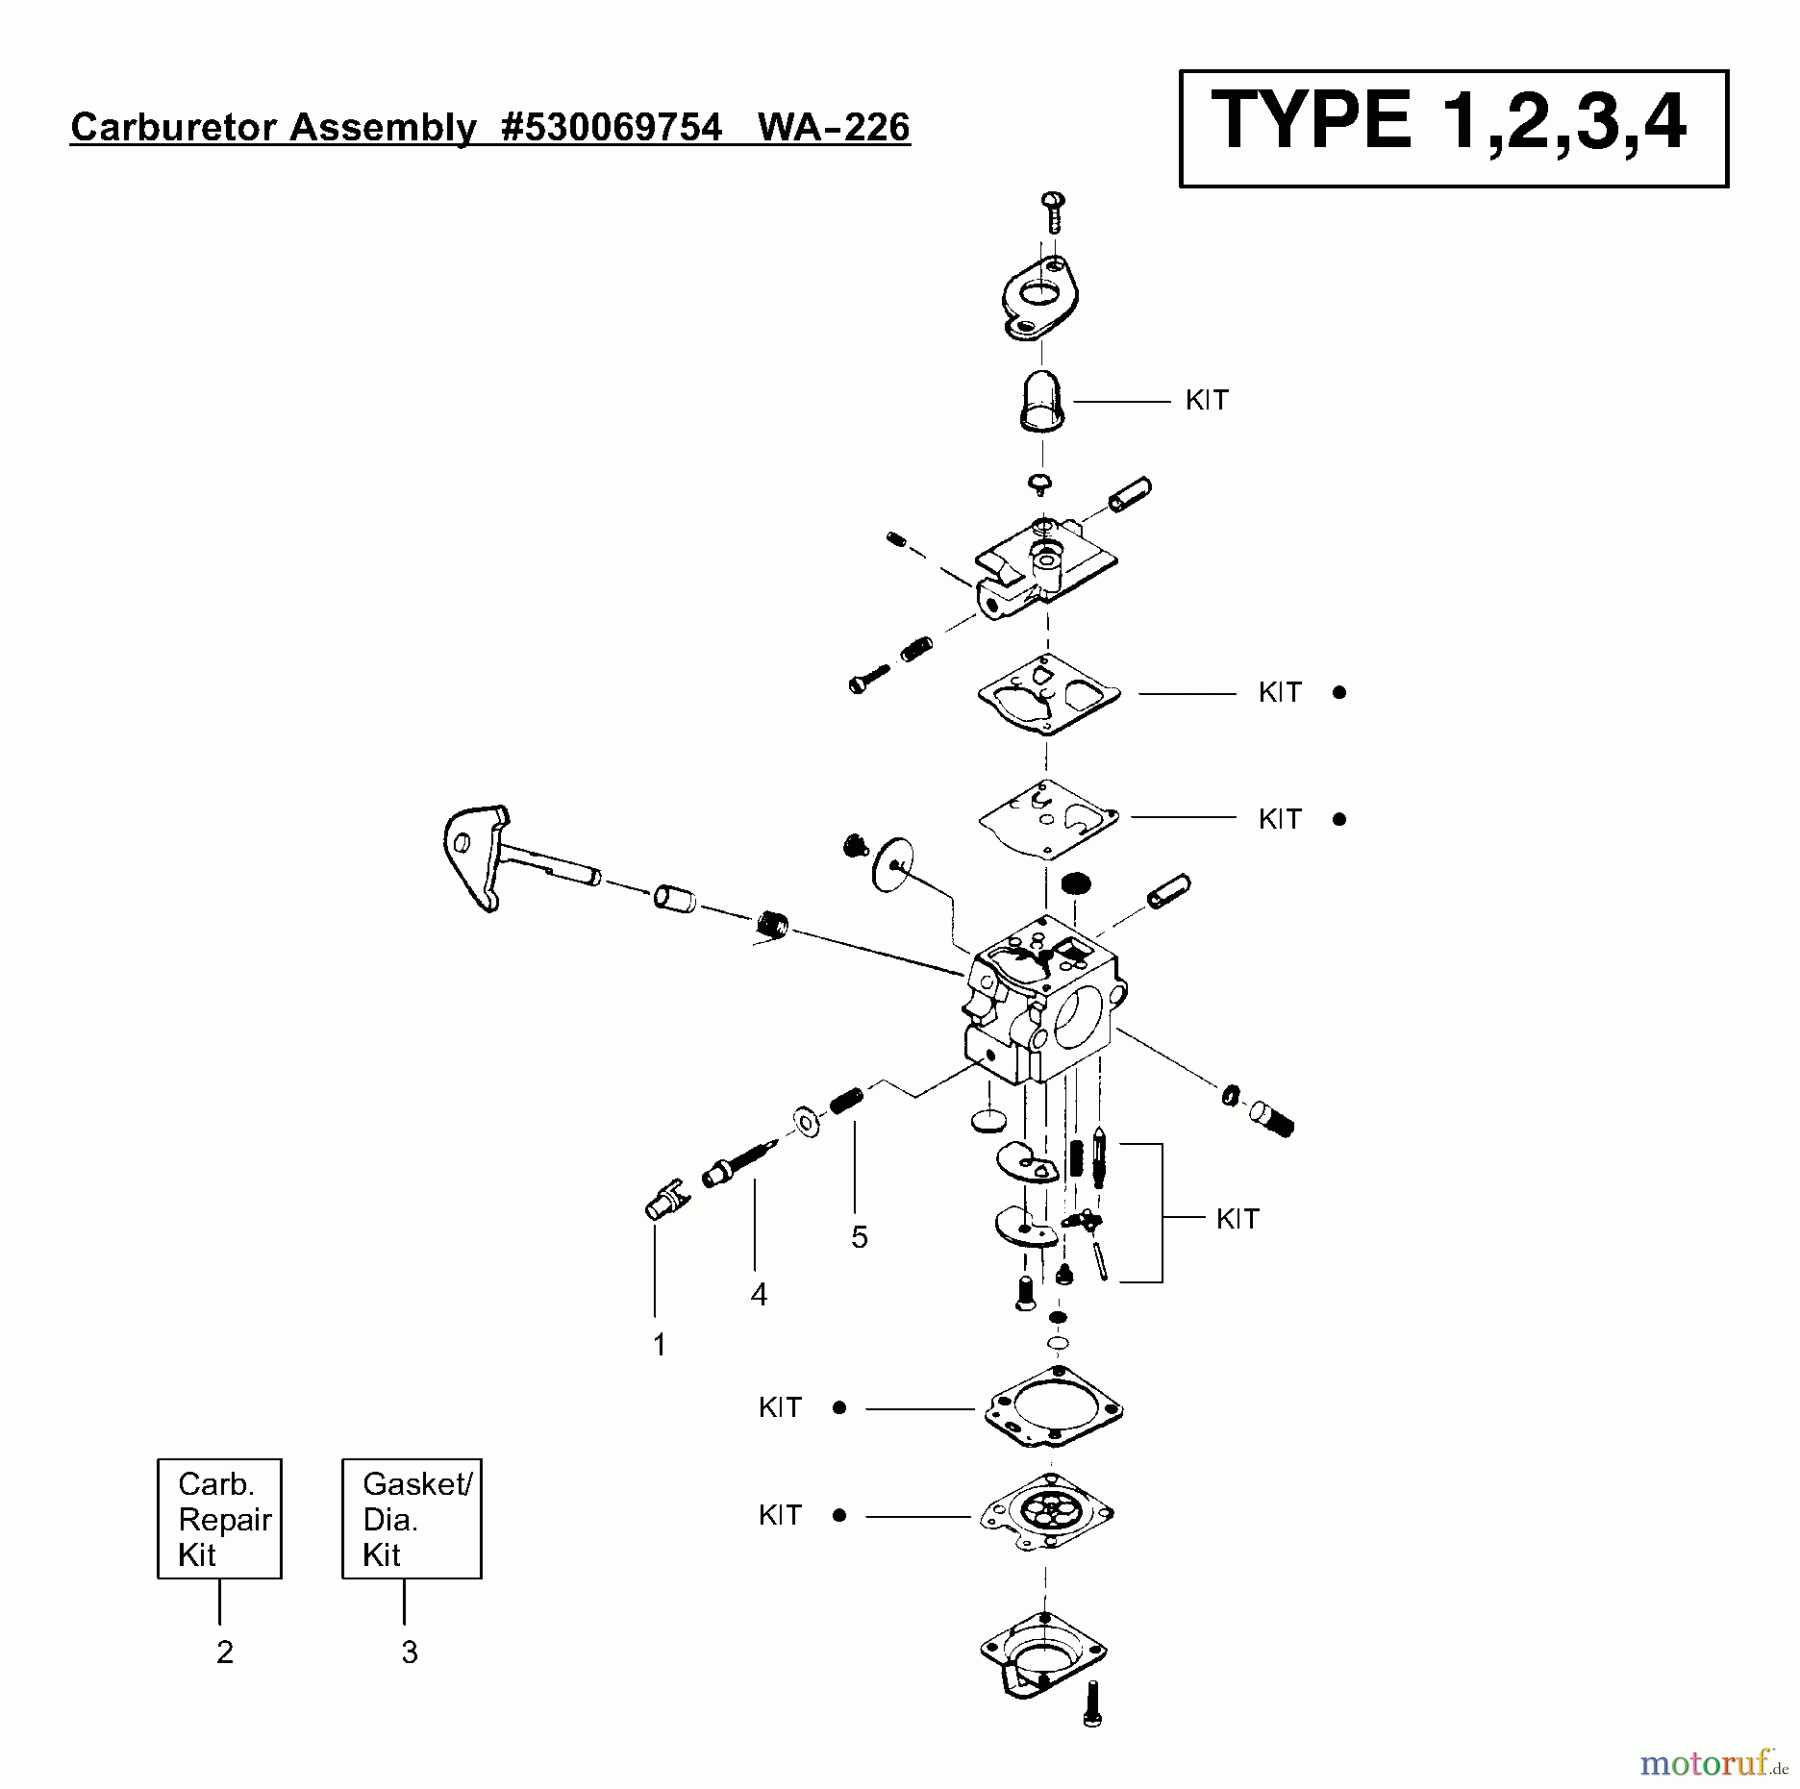  Poulan / Weed Eater Motorsensen, Trimmer SST25 (Type 2) - Weed Eater Featherlite HO String Trimmer Carburetor Assembly (WA226) P/N 530069754